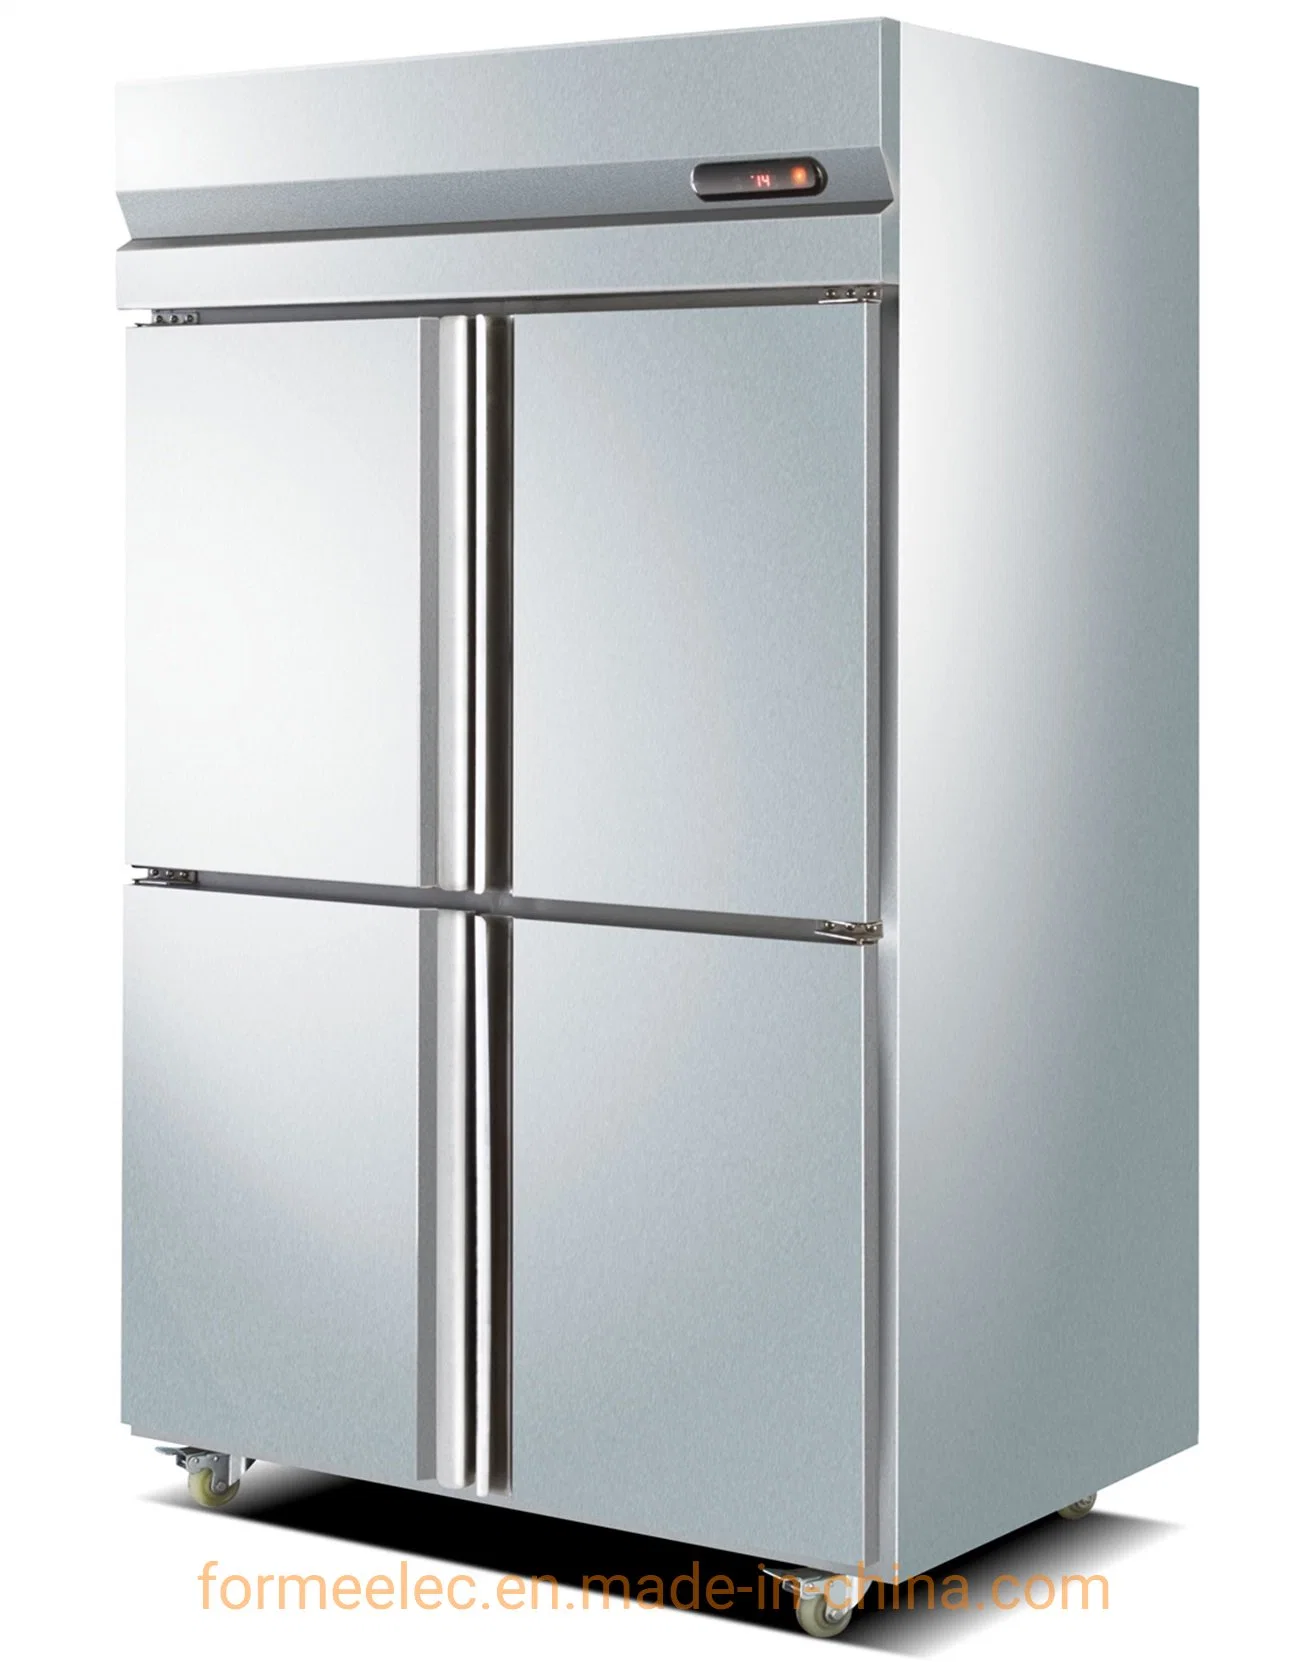 1000L Commercial Freezer Vertical Kitchen Refrigerator Air Cooling Kitchen Freezer